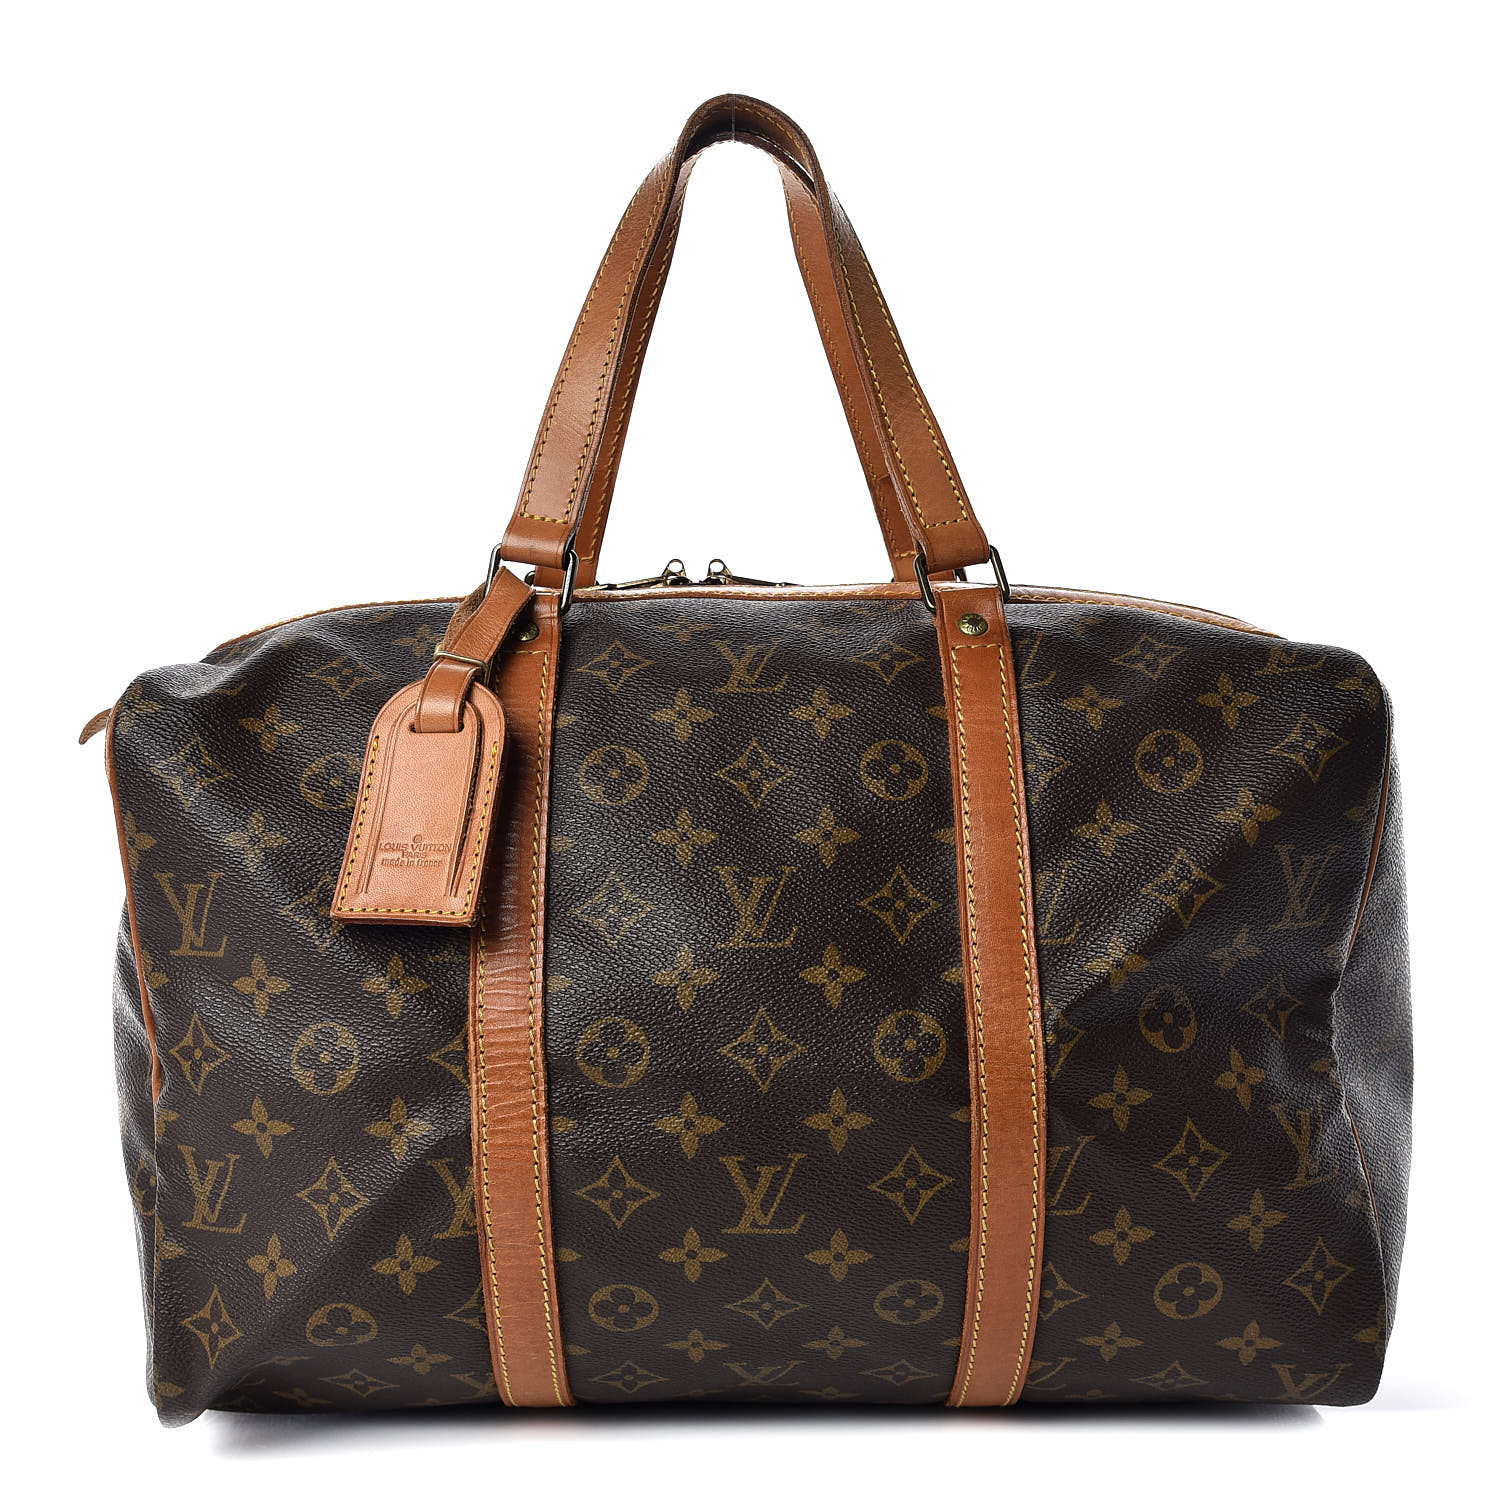 Louis Vuitton Bags Sold At Dillard